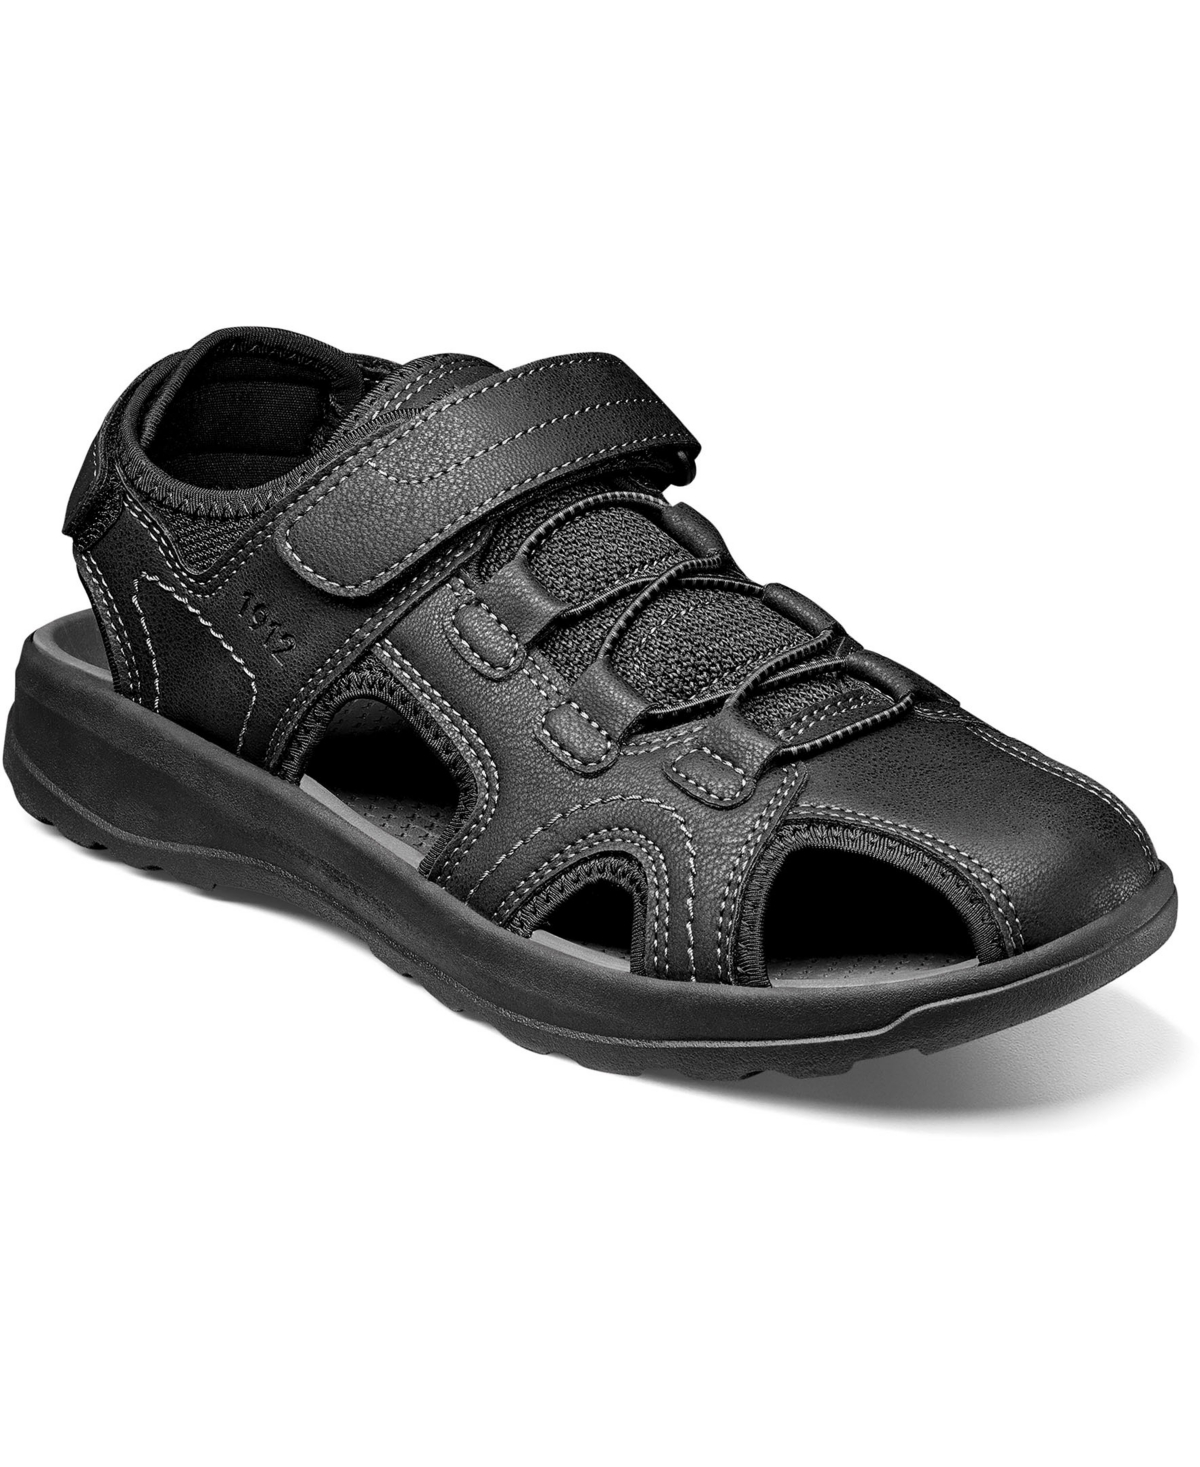 Nunn Bush Huck Sport Sandal In Black